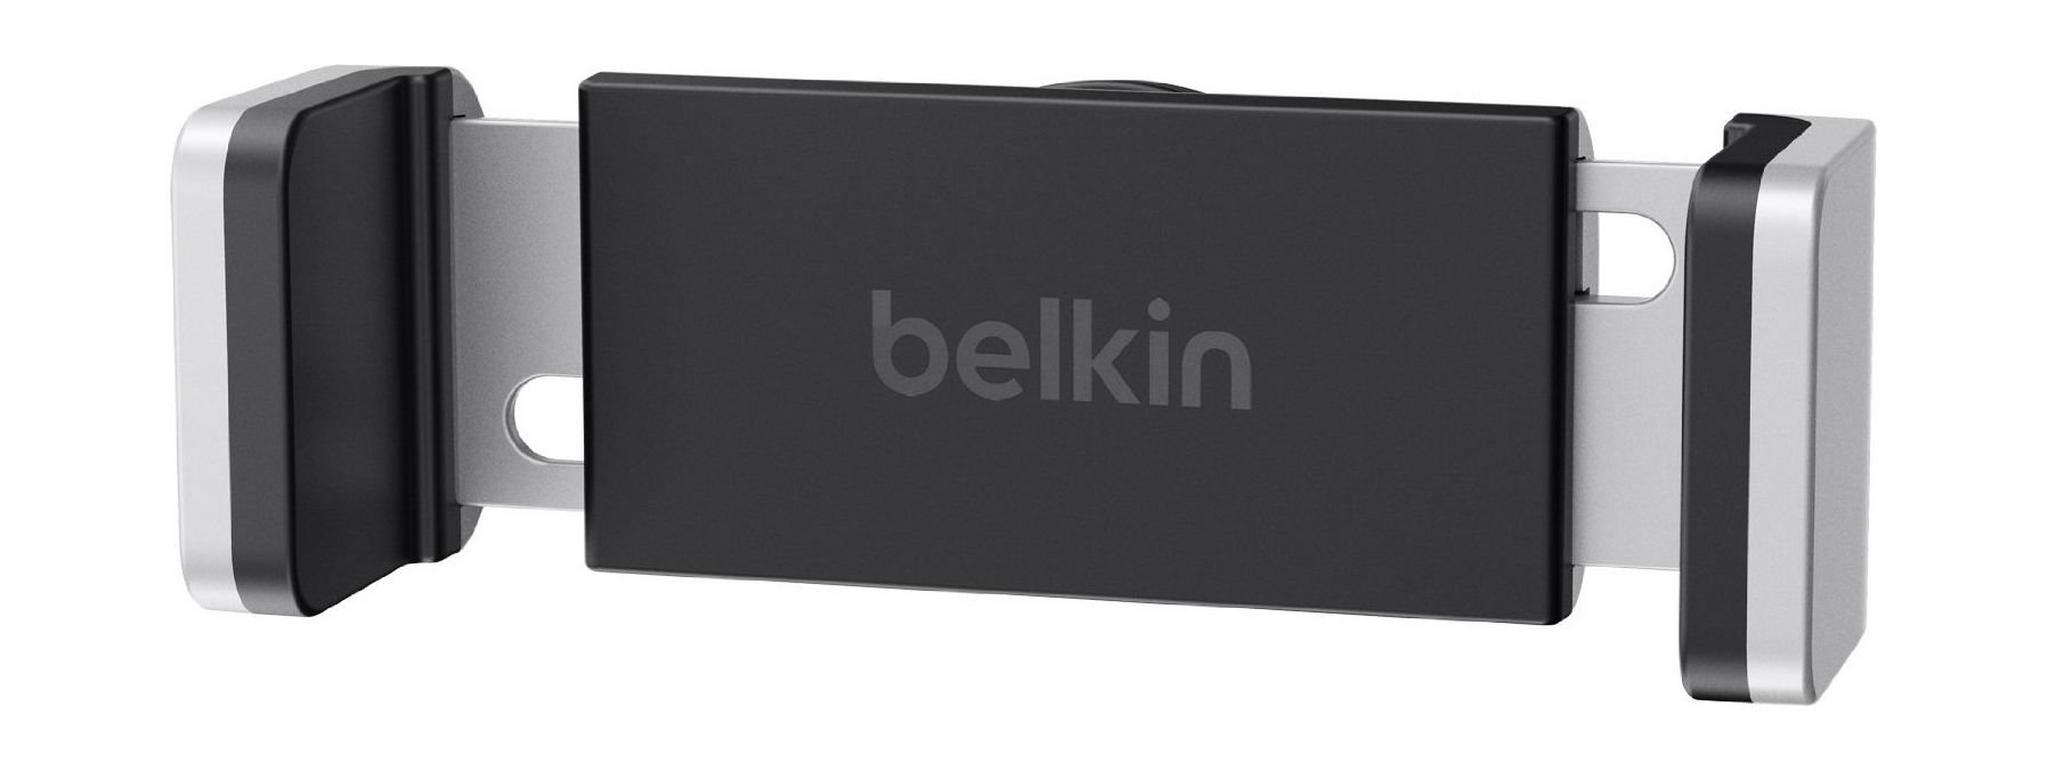 Belkin Smartphone Car Vent Mount (F8M879bt) - Silver